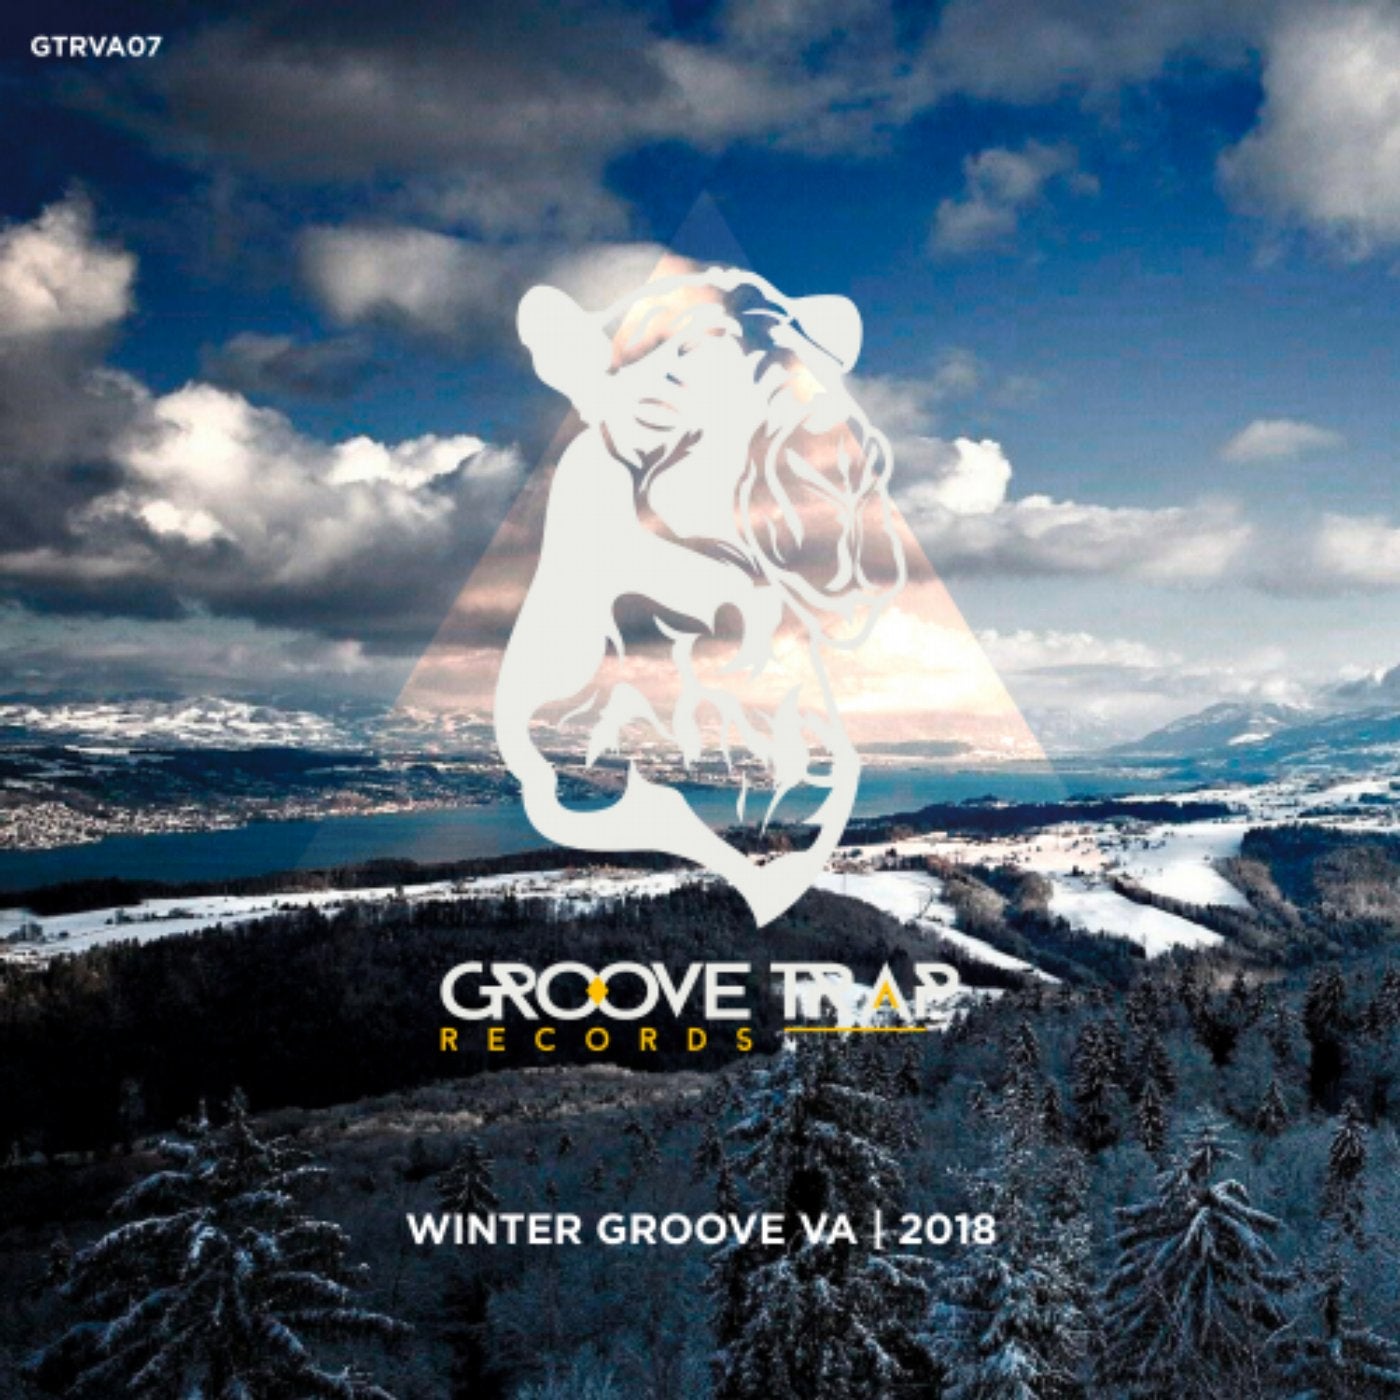 Winter Groove VA | 2018